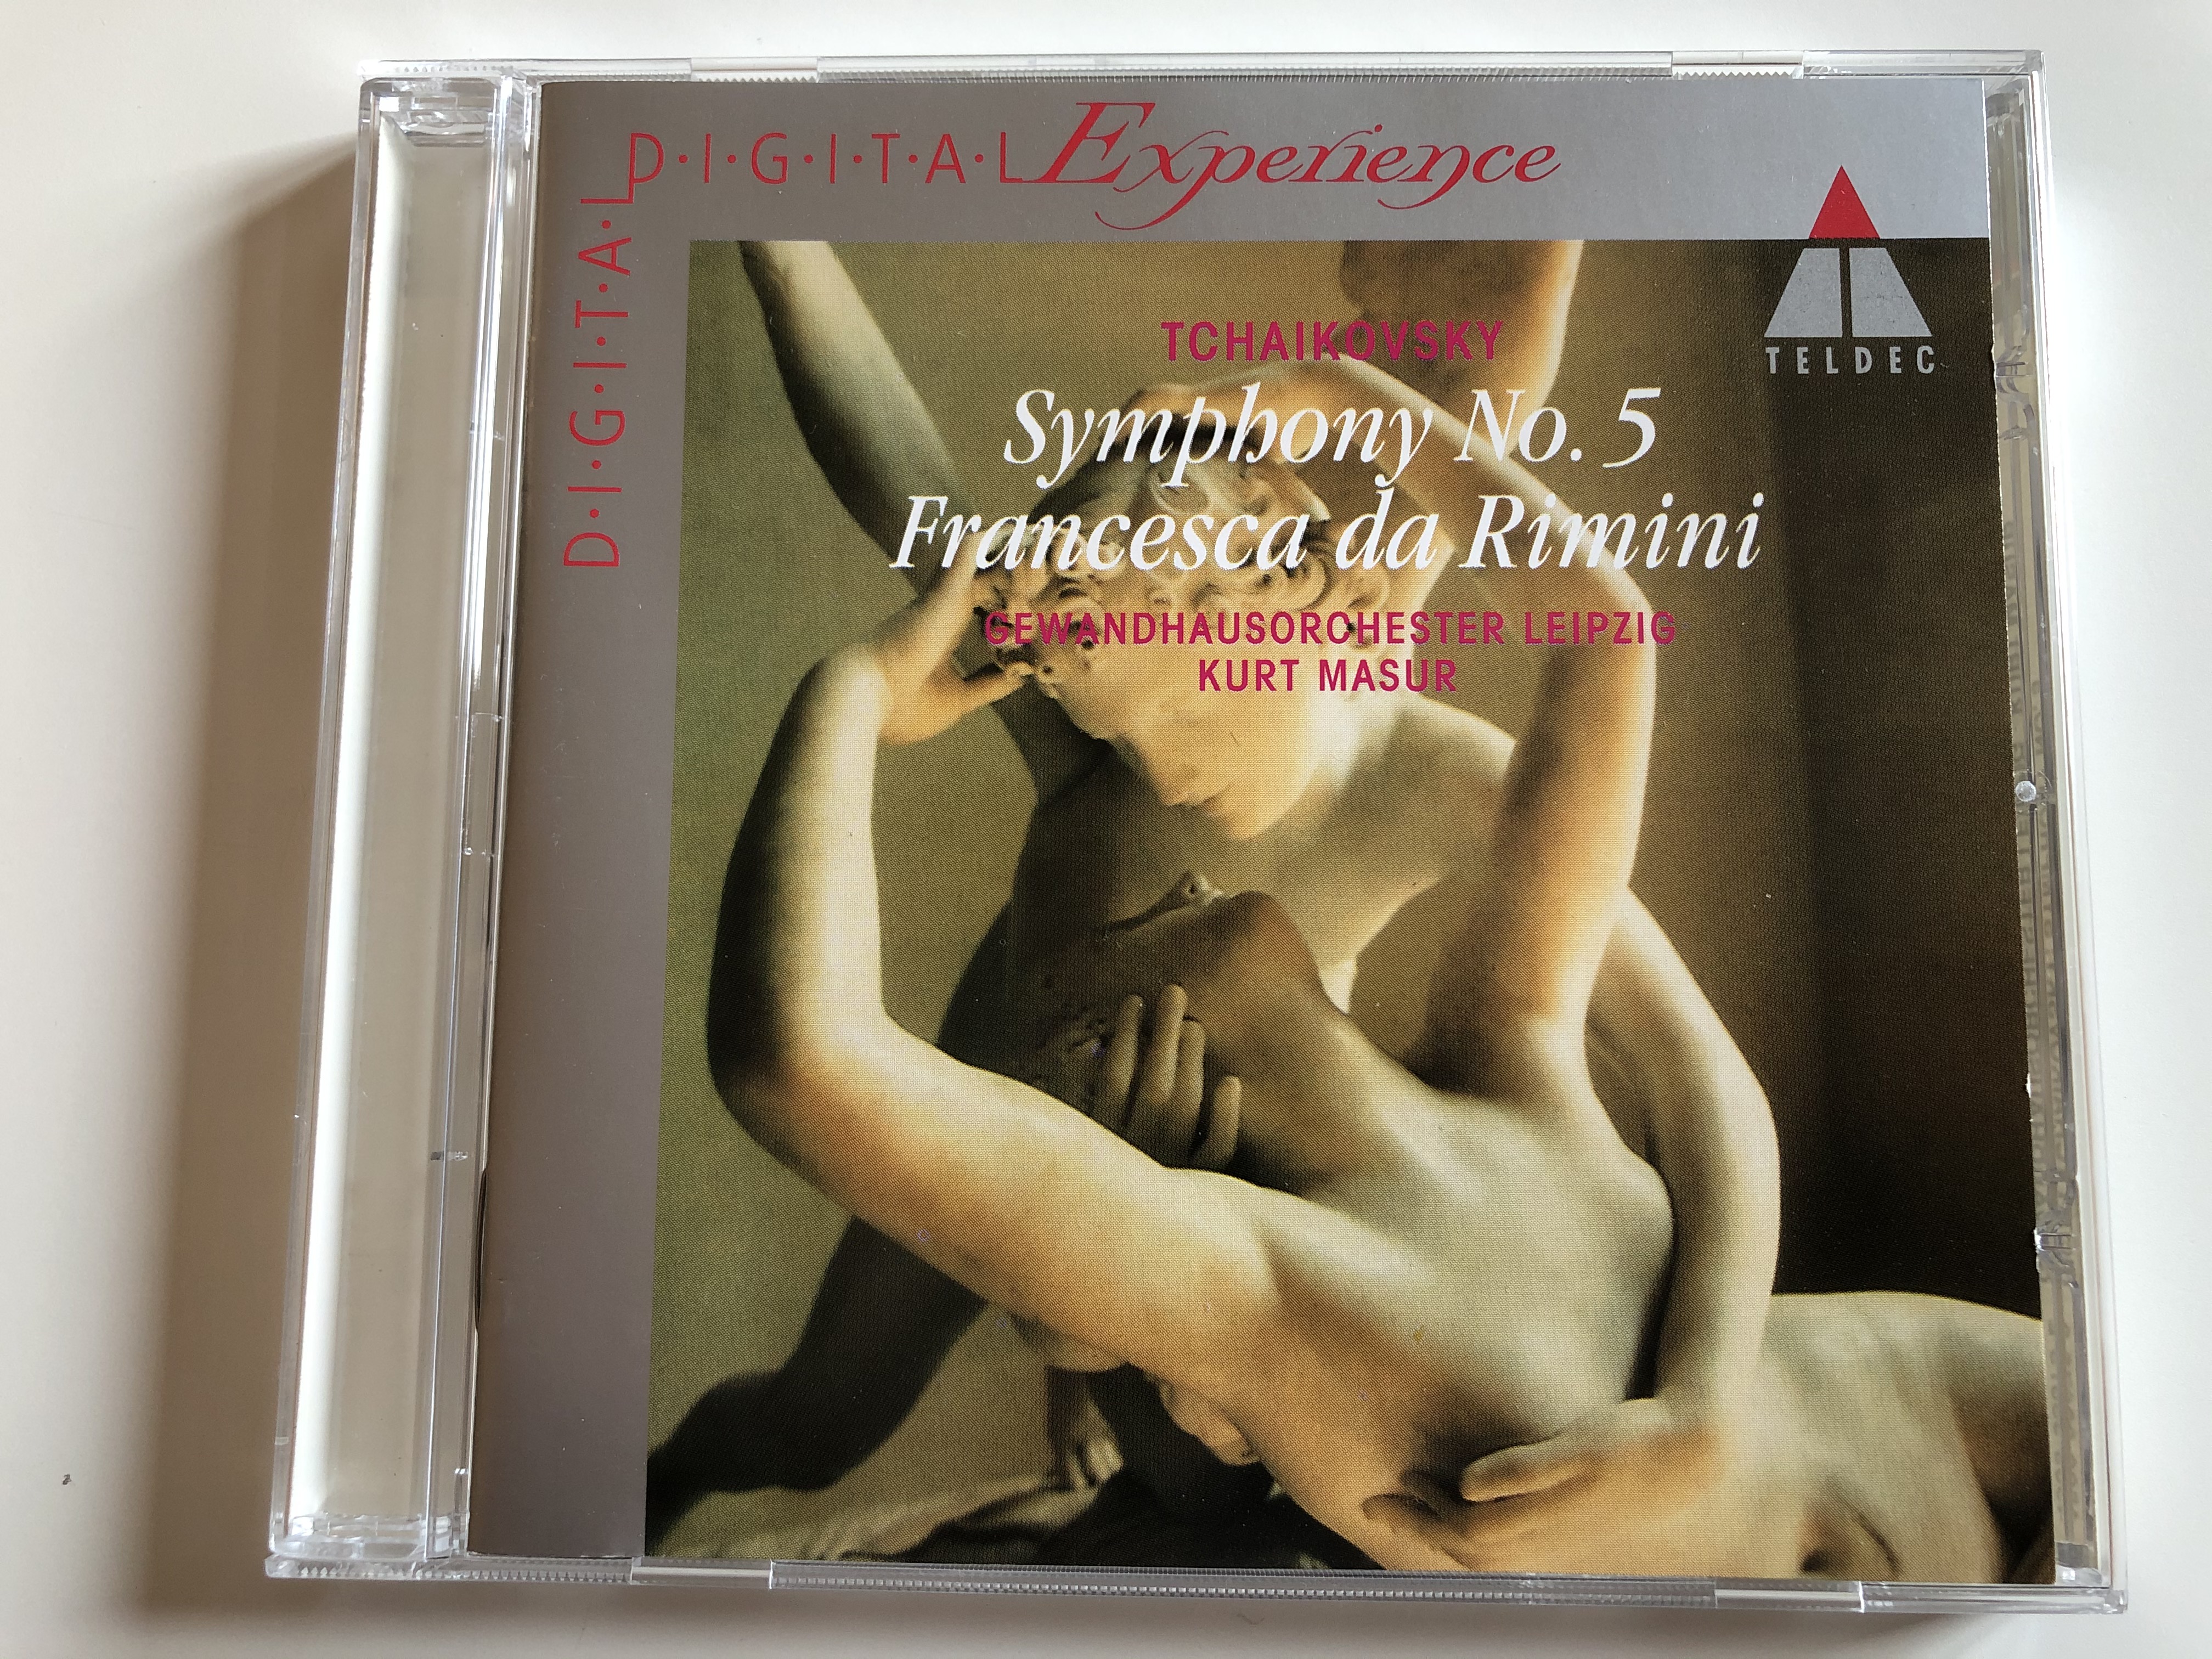 tchaikovsky-symphony-no.-5-francesca-da-rimini-gewandhausorchester-laipzig-kurt-masur-digital-experience-audio-cd-stereo-4509-93675-2-1-.jpg